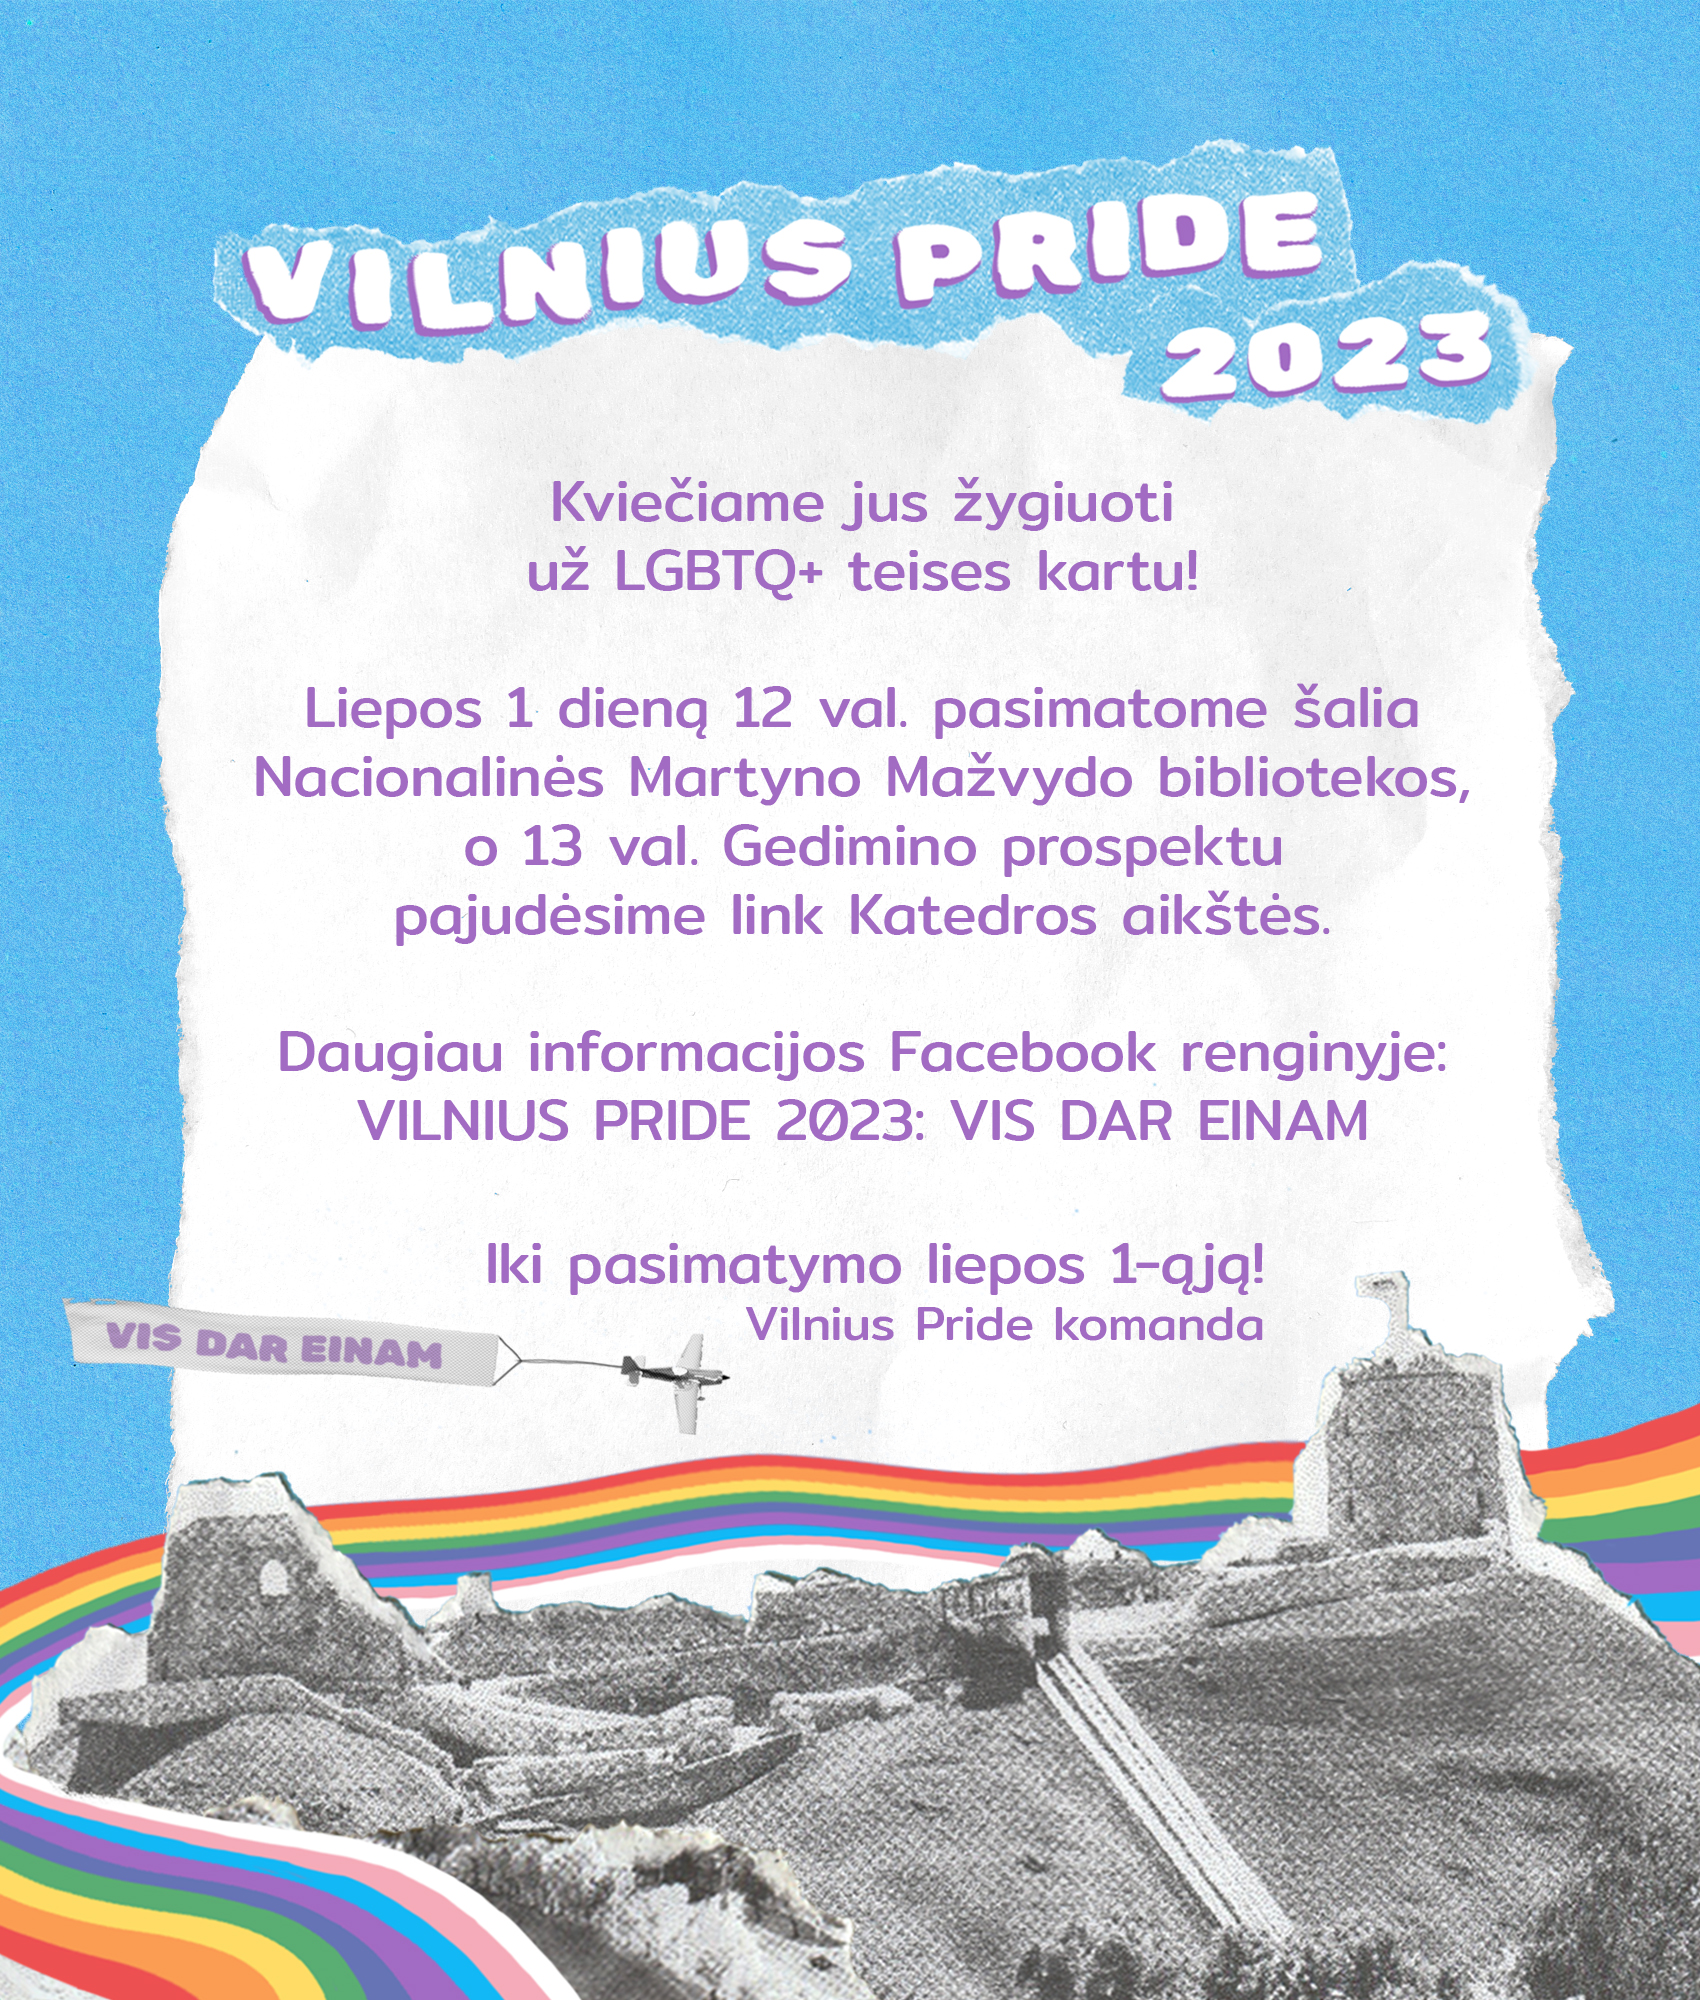 Vilnius pride